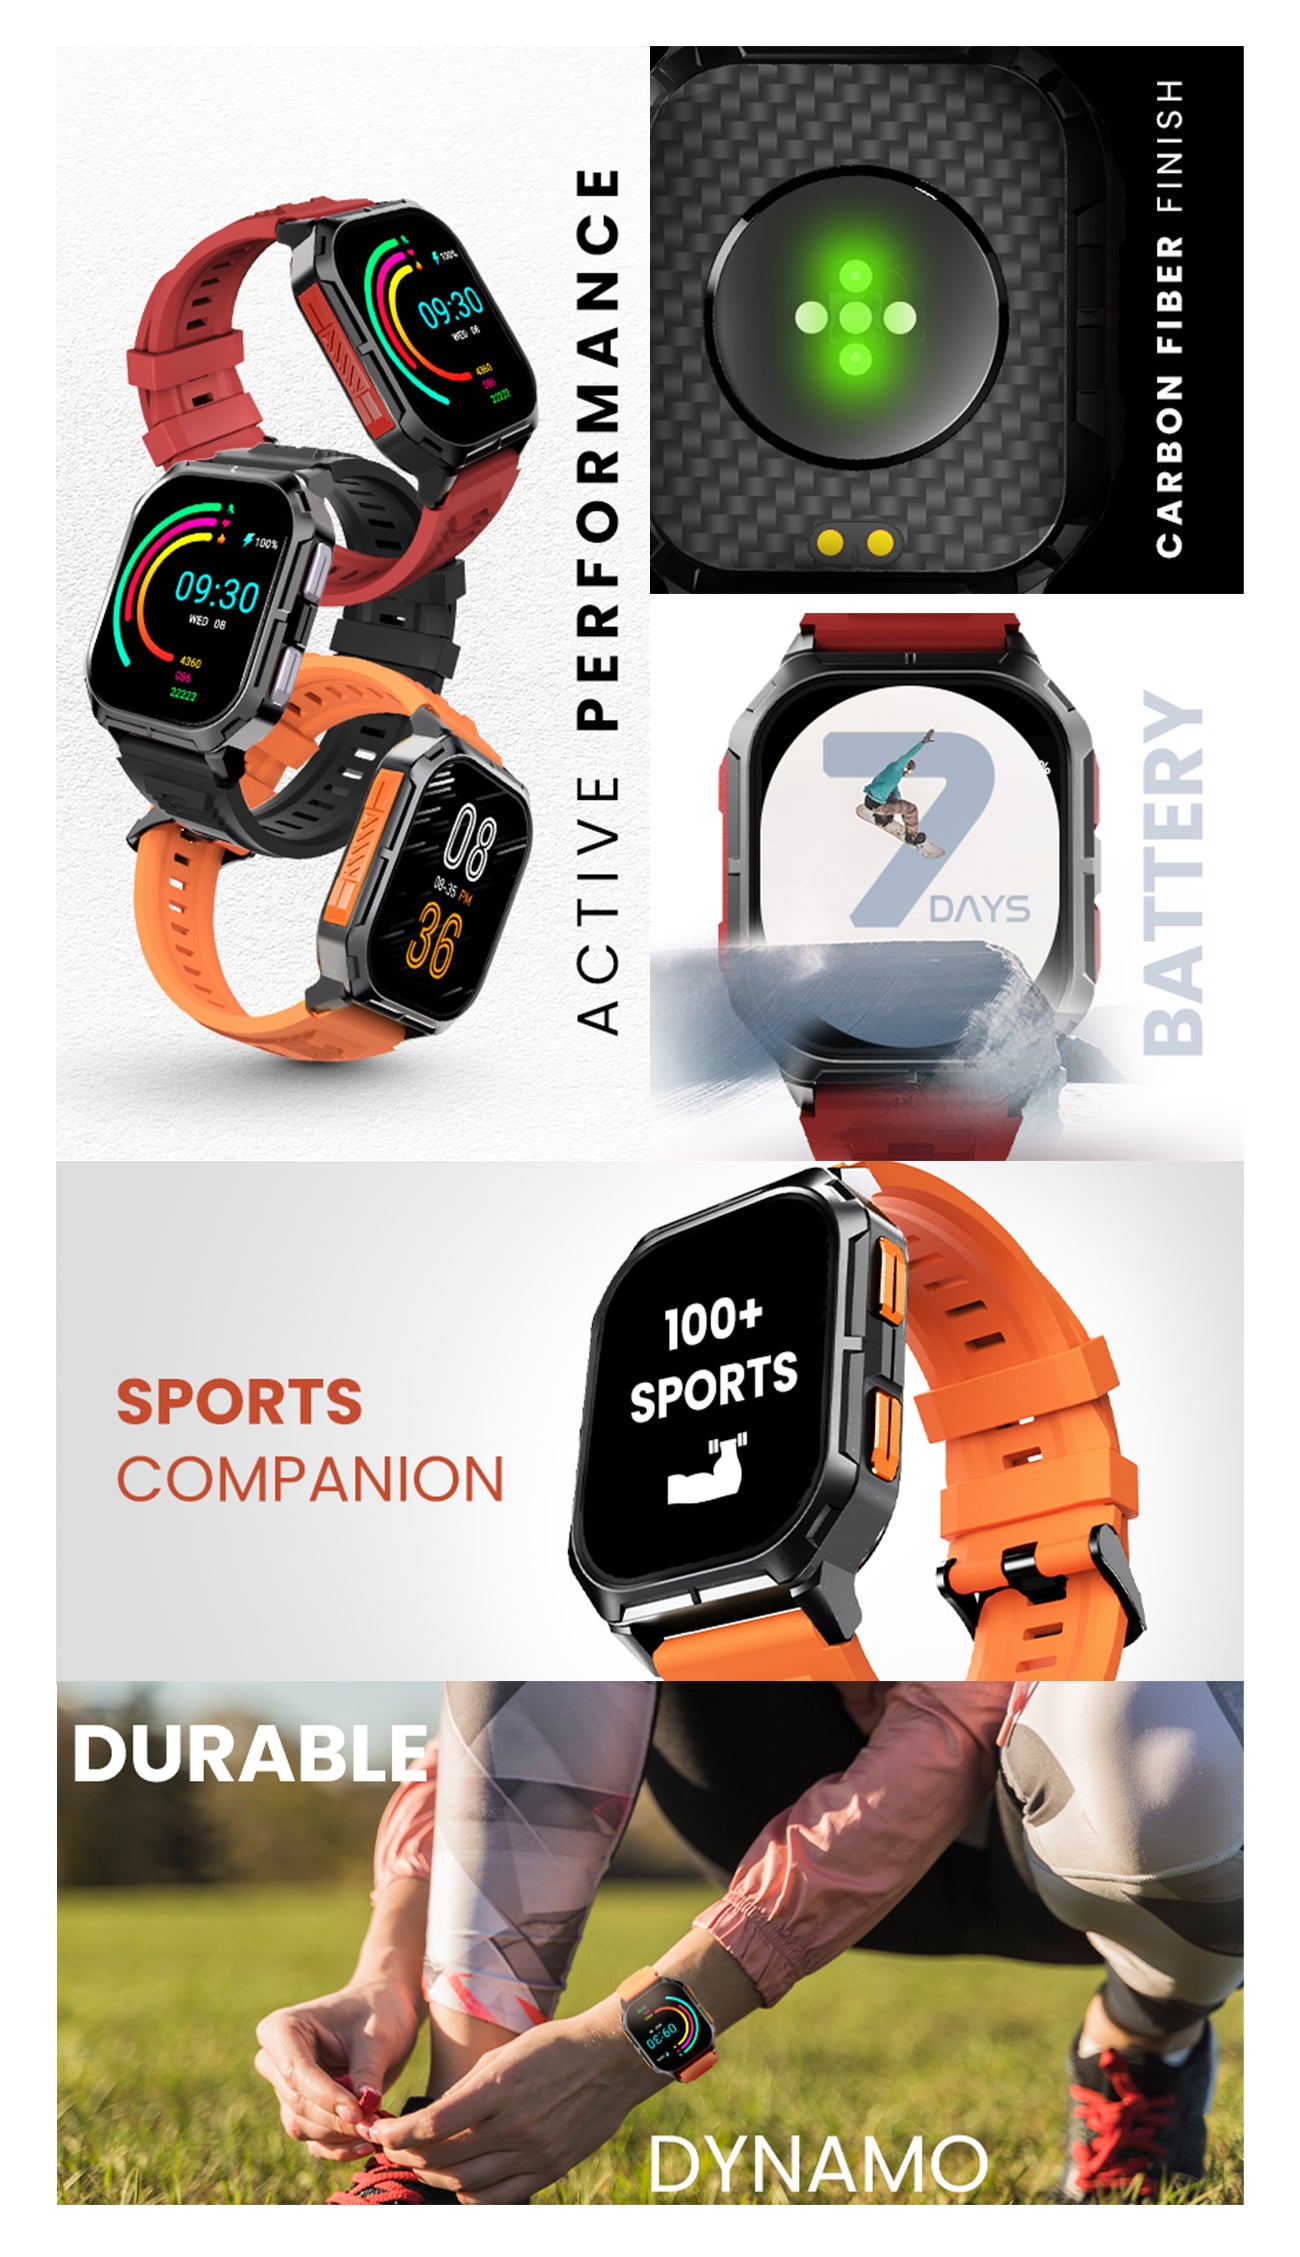 HiFuture Ultra3 Smartwatch with 2.0-inch IPS Display, Wireless Calling, IP68 Waterproof Rating